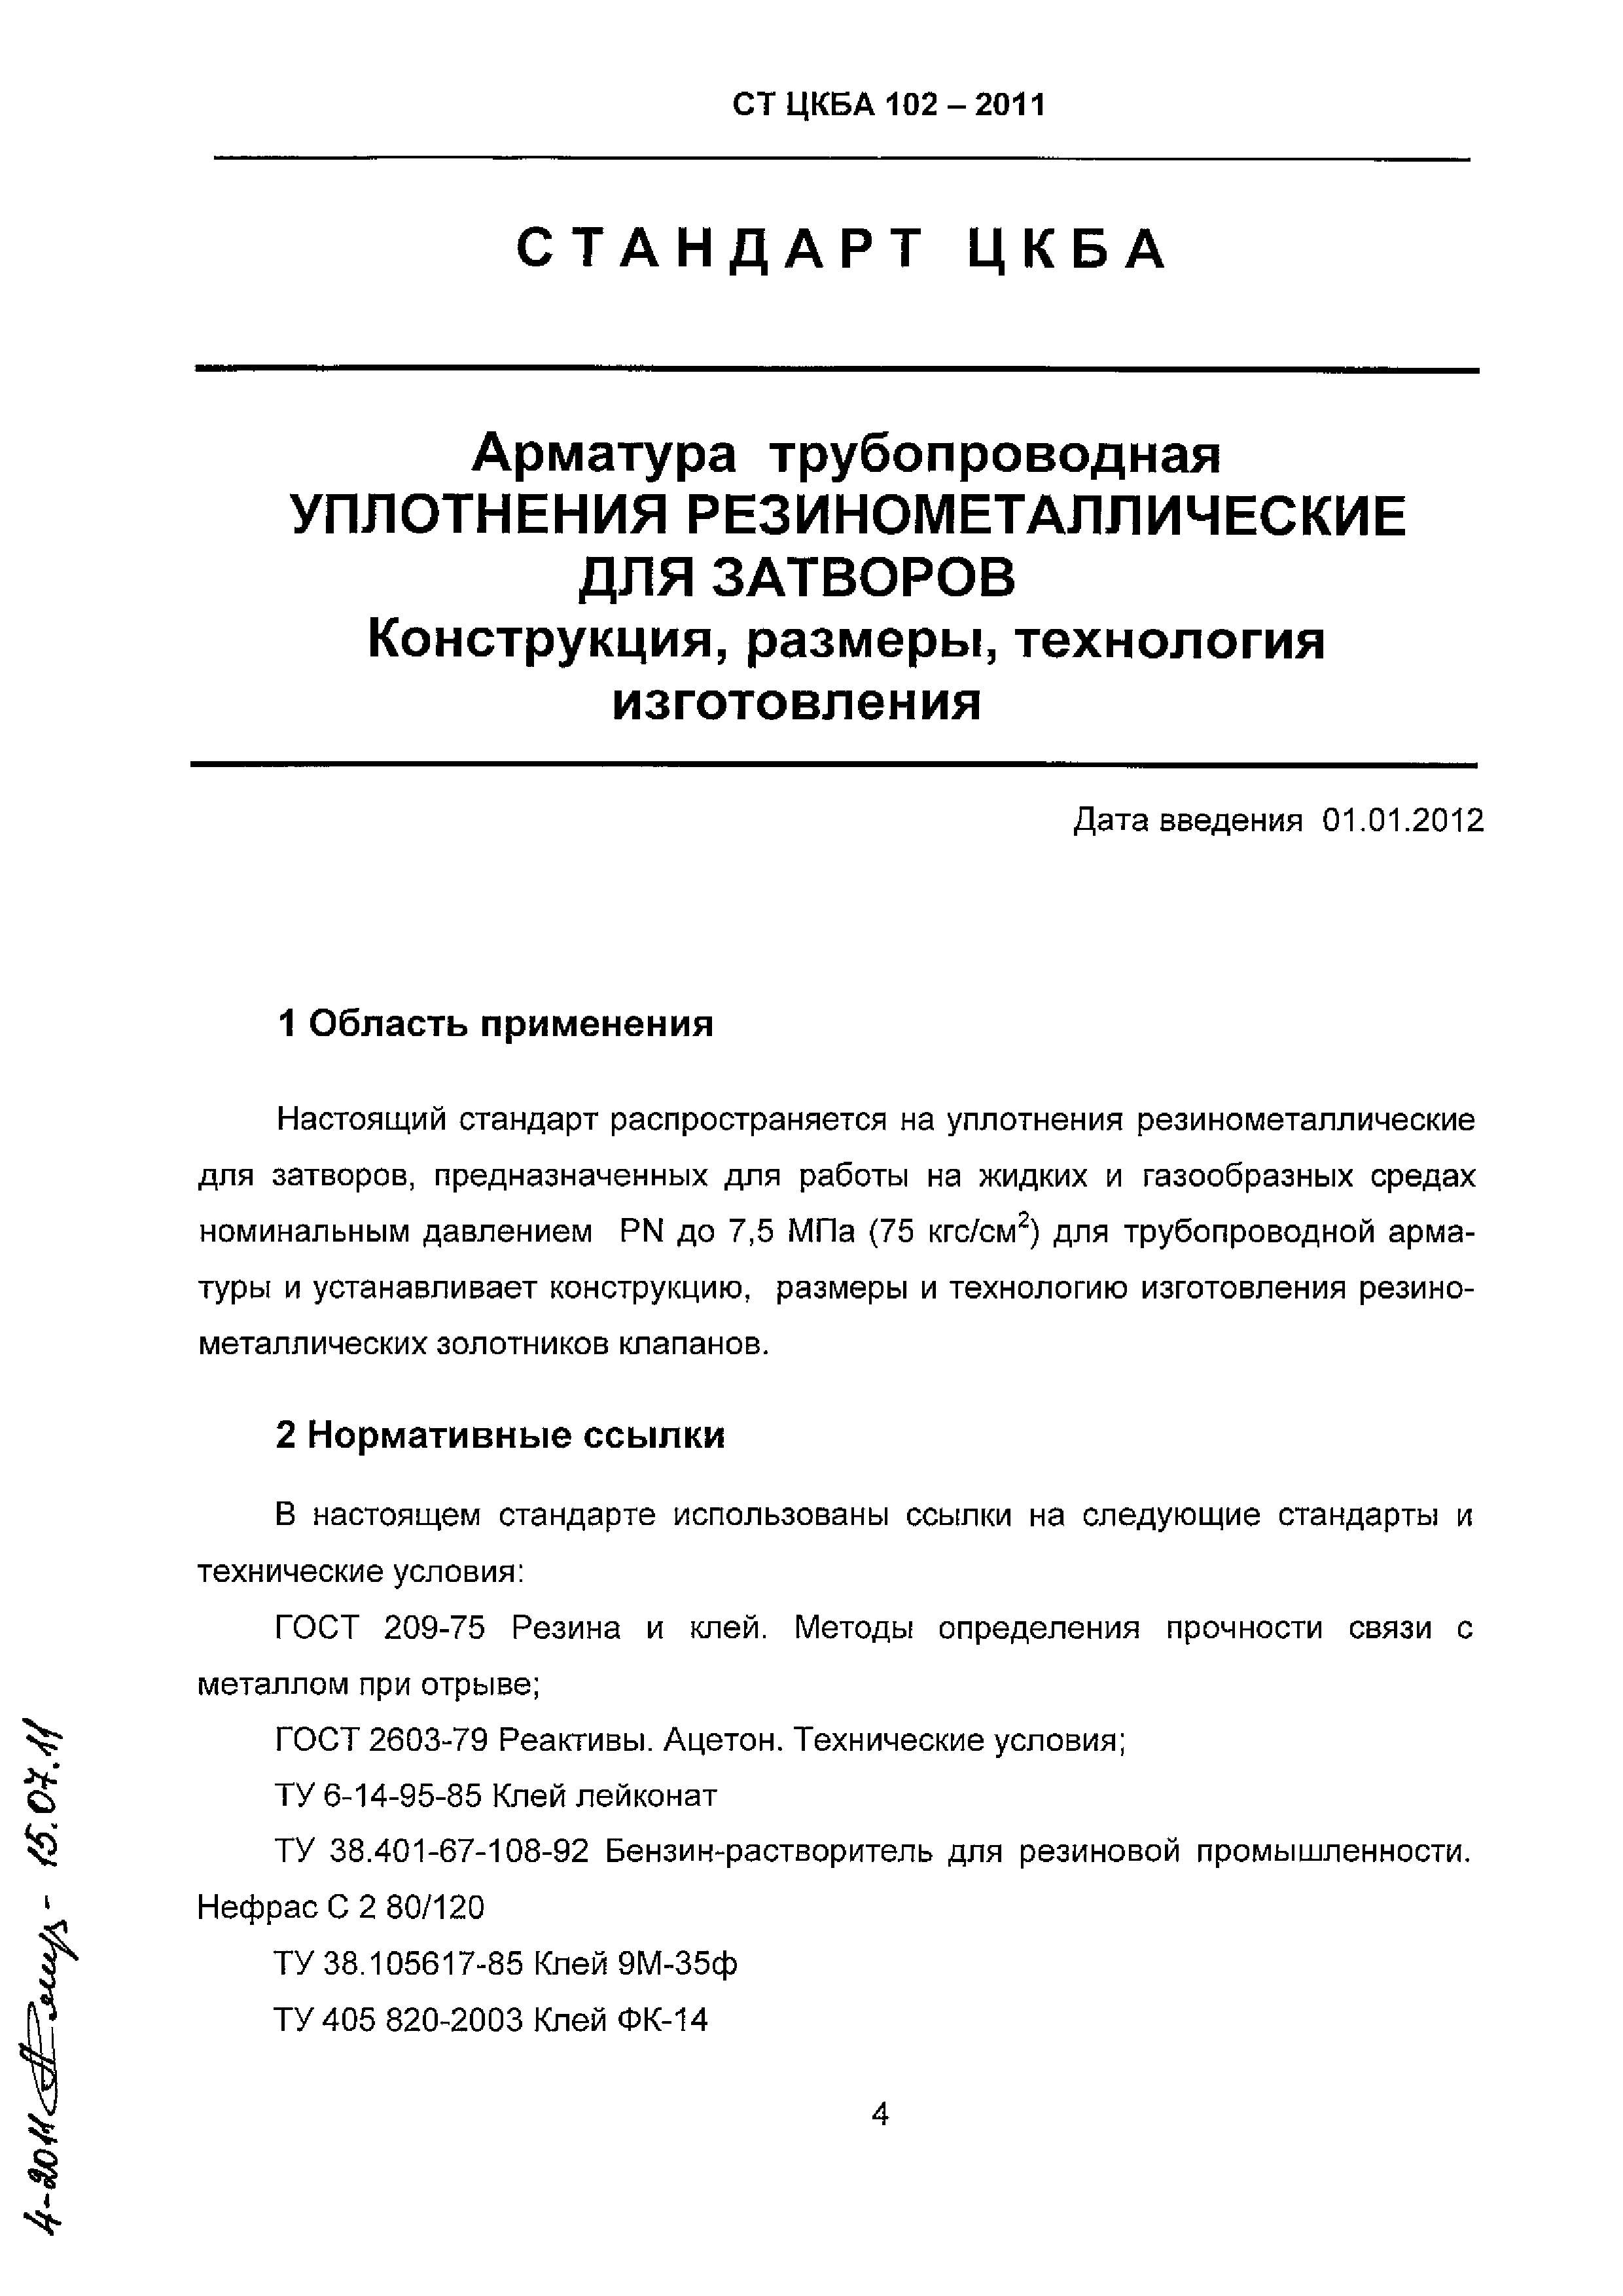 СТ ЦКБА 102-2011